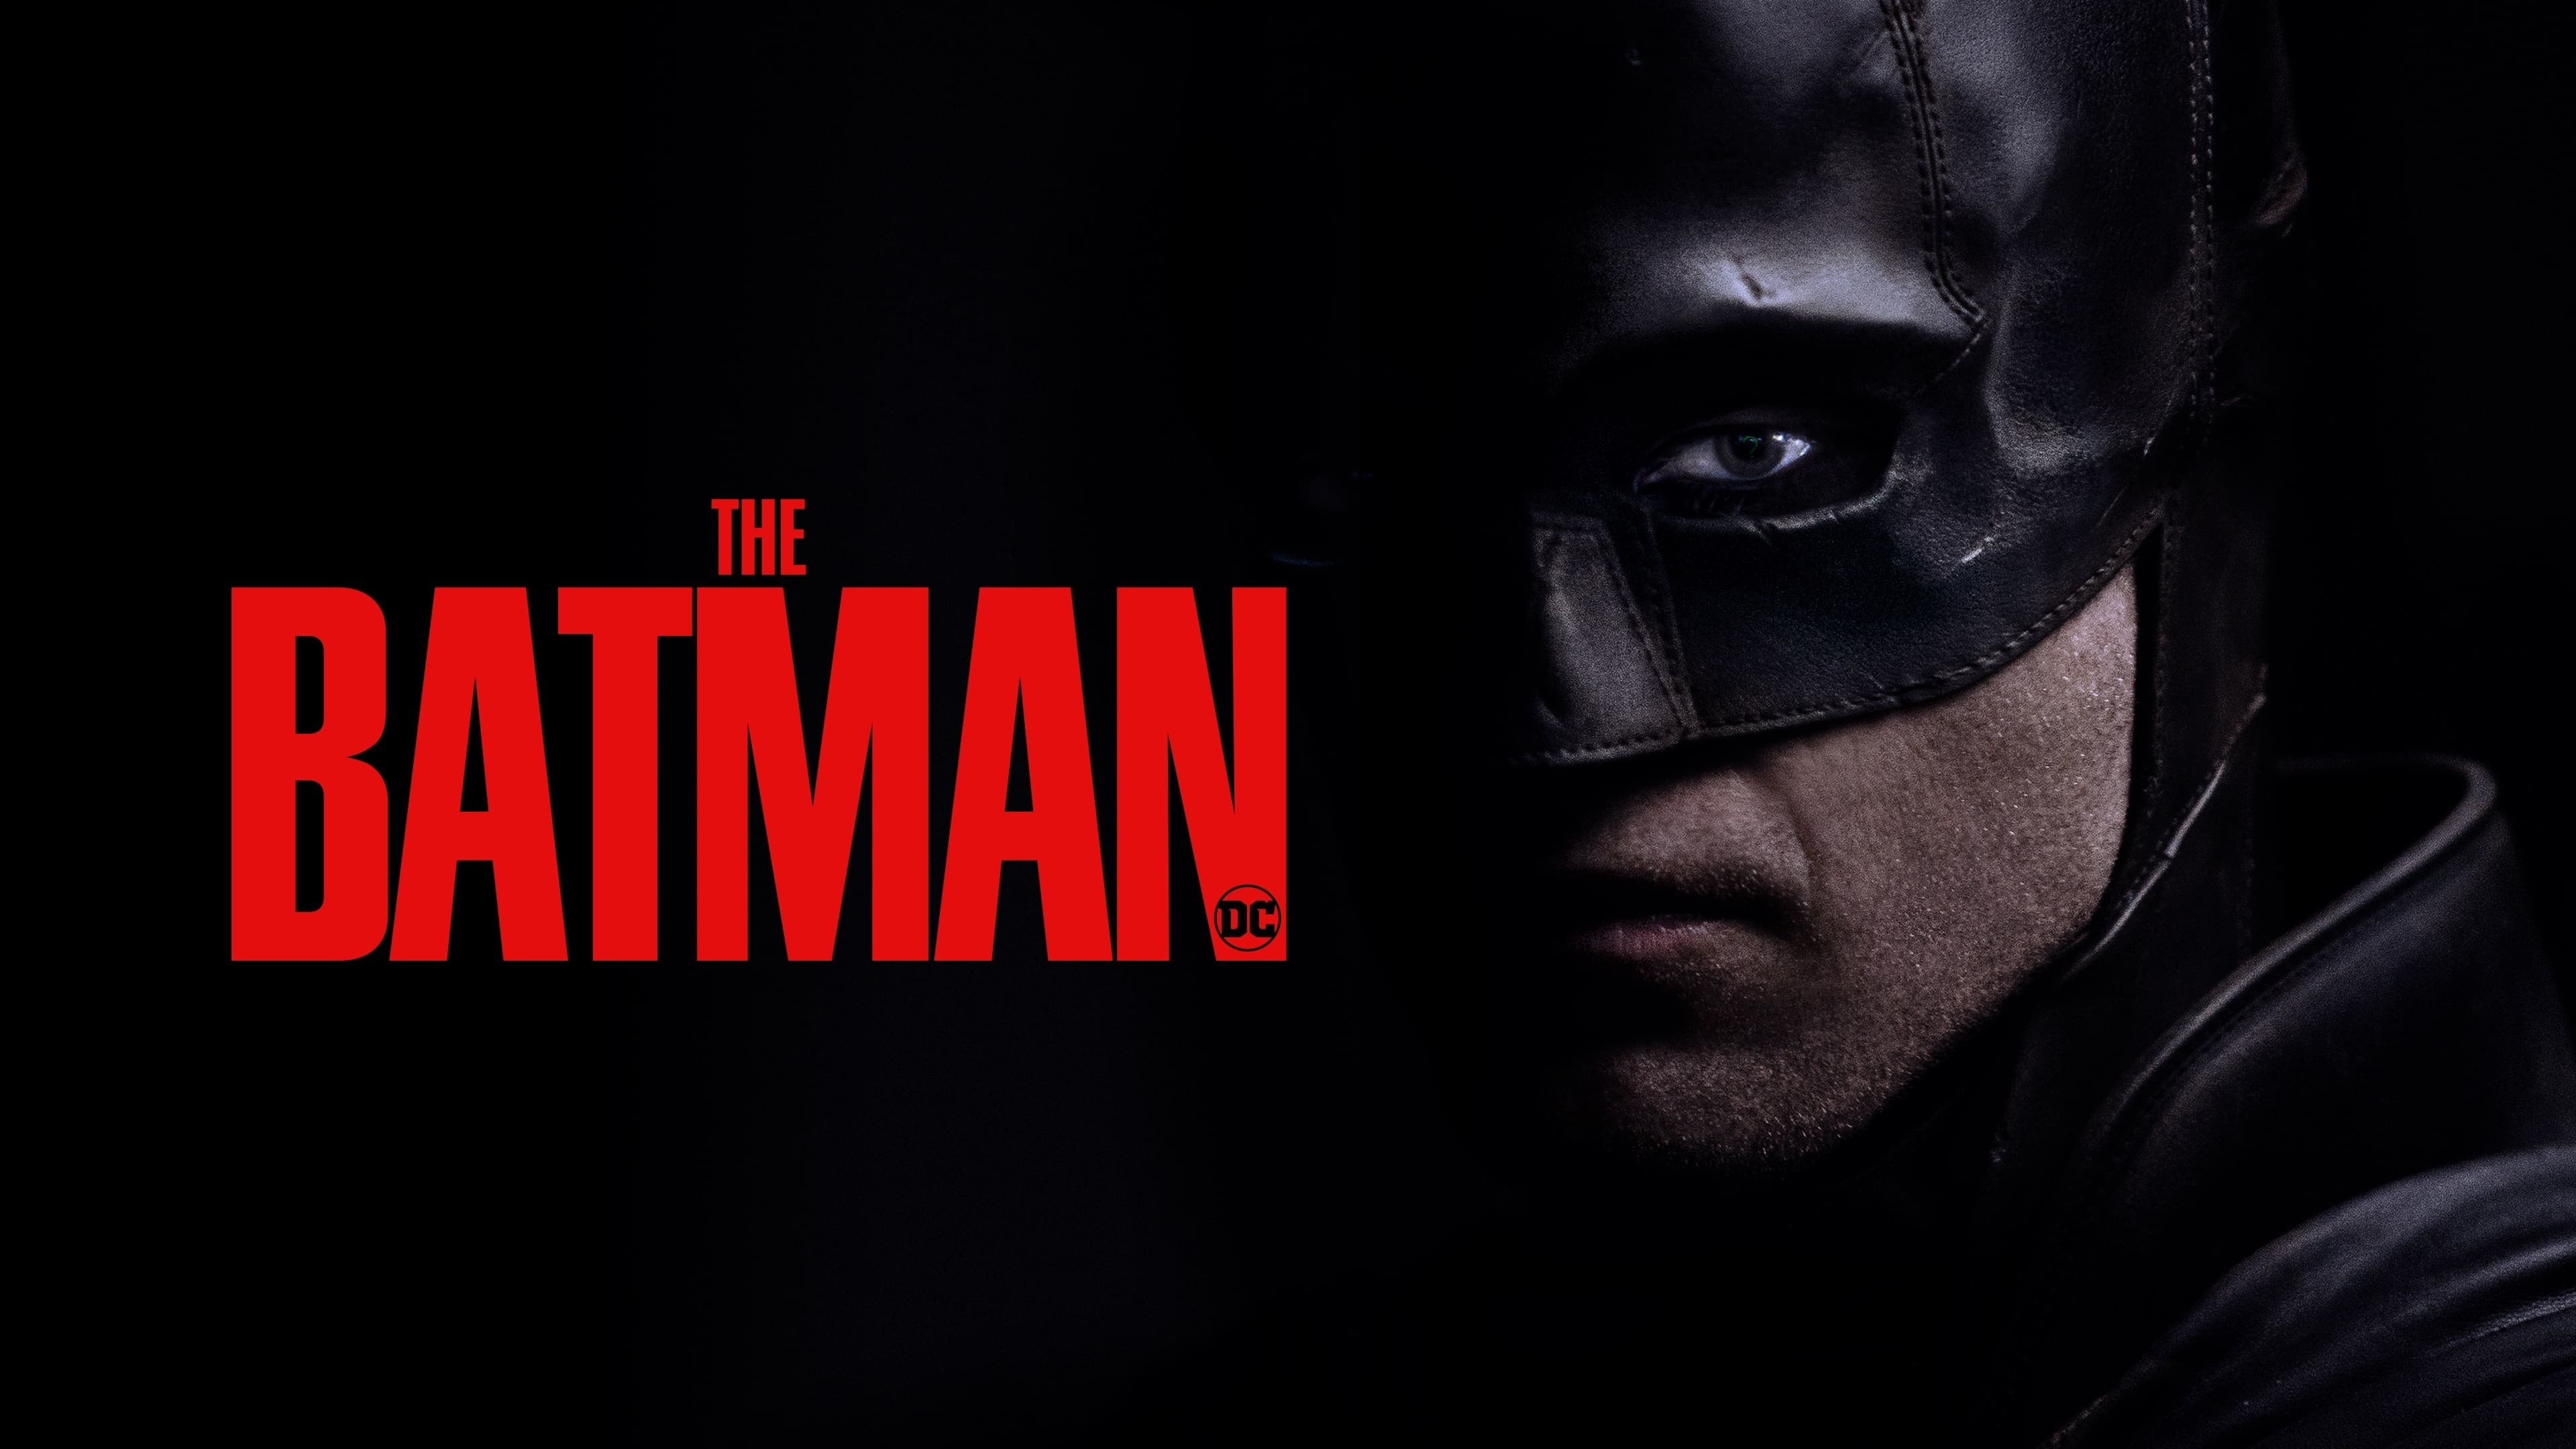 THE BATMAN 2022 International Movie Trailer Robert Pattinson Tries to  Unmask the Truth of Gotham City  FilmBook